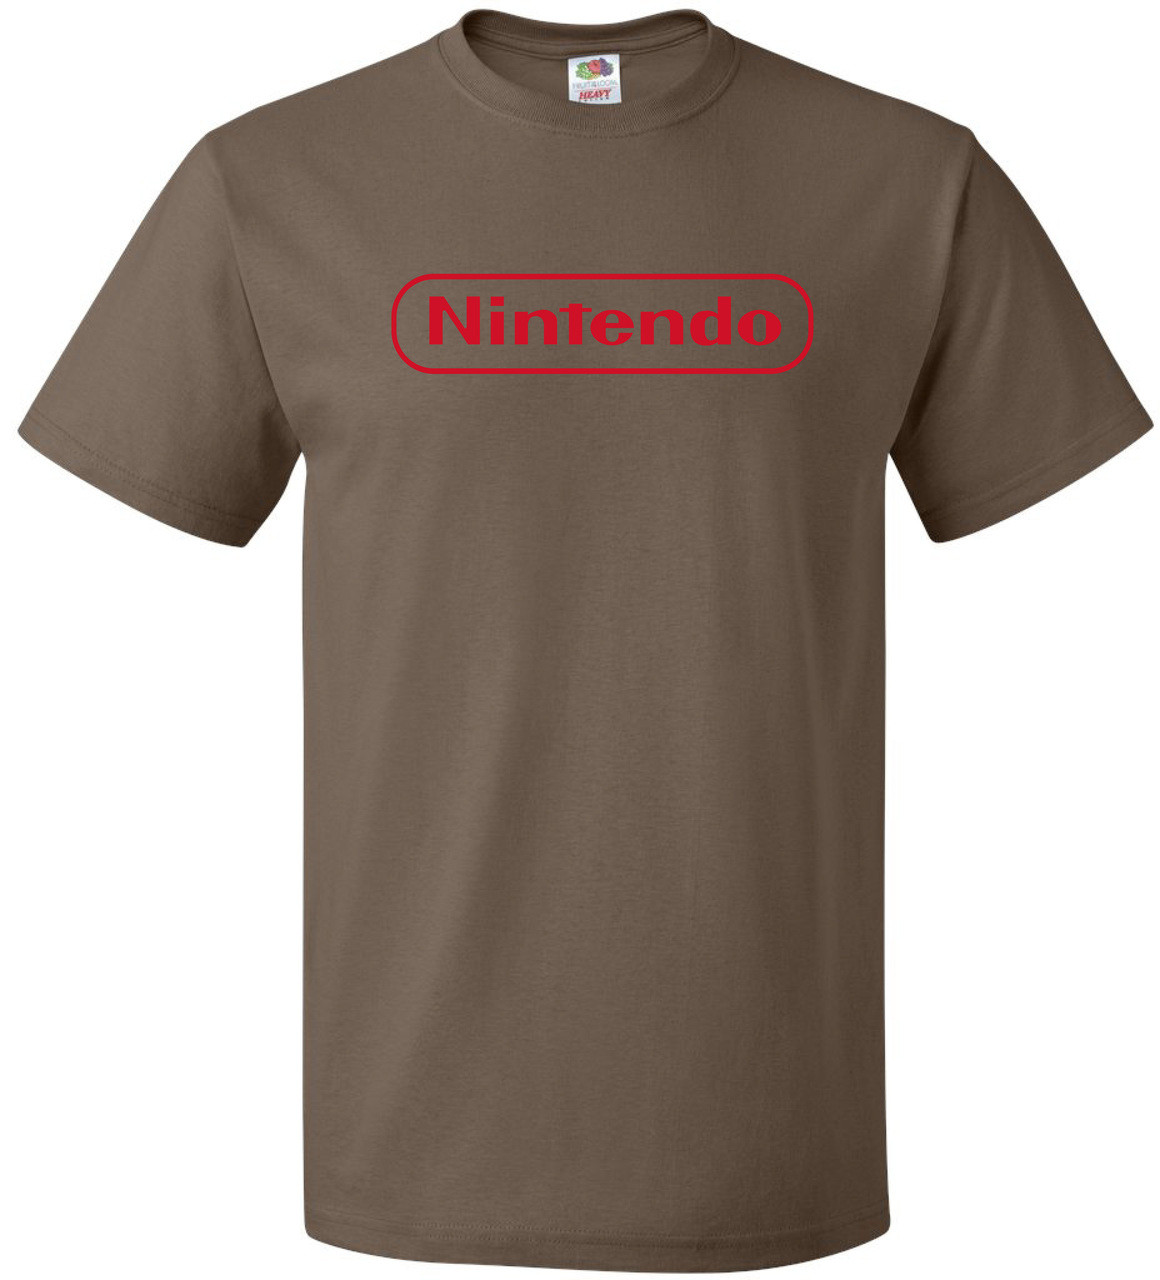 Nintendo Logo Retro Video Game T-Shirt - Interspace180